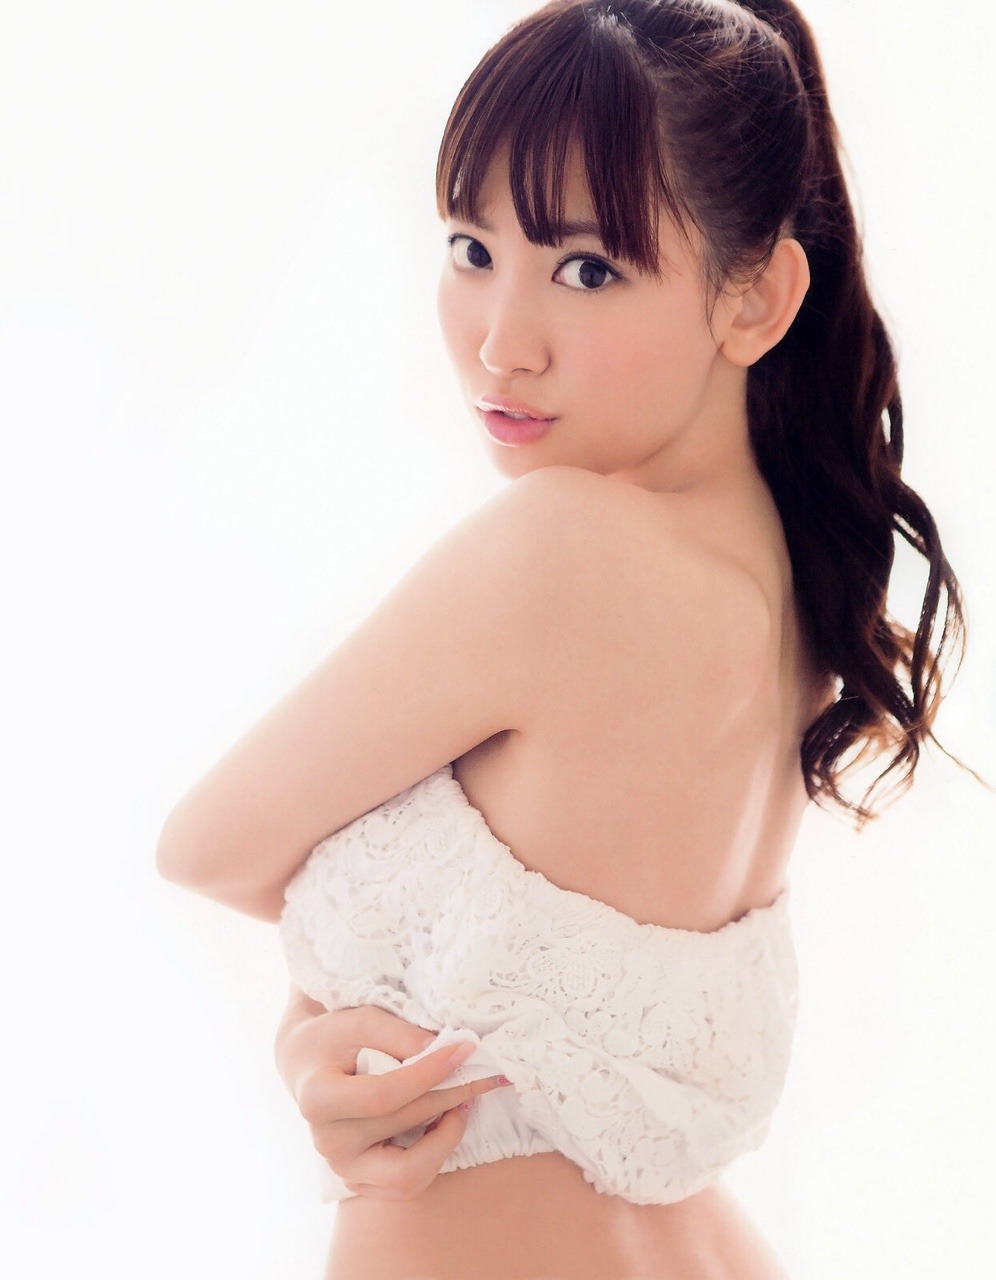 kawaii-kirei-girls-and-women:  可愛い 小嶋陽菜 さん 日本の可愛いキレイな女性の写真です♪